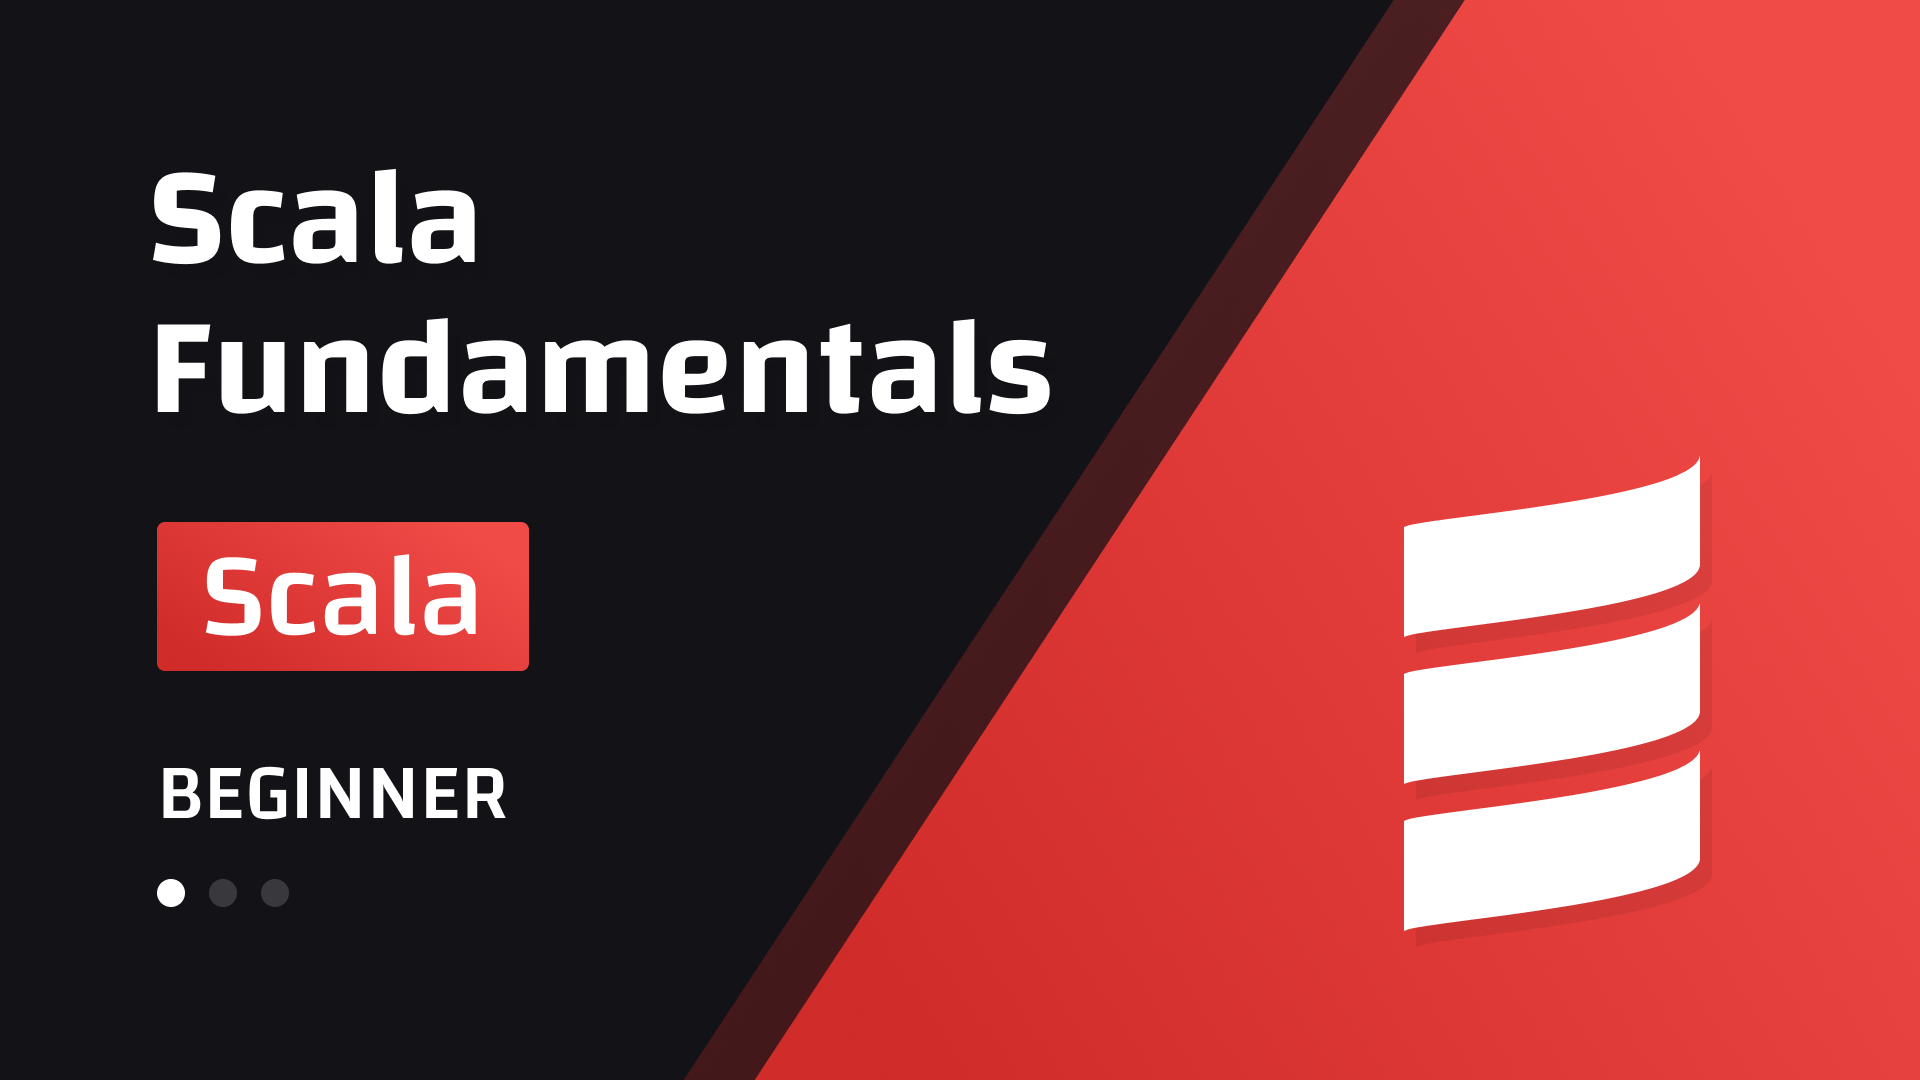 Scala Fundamentals